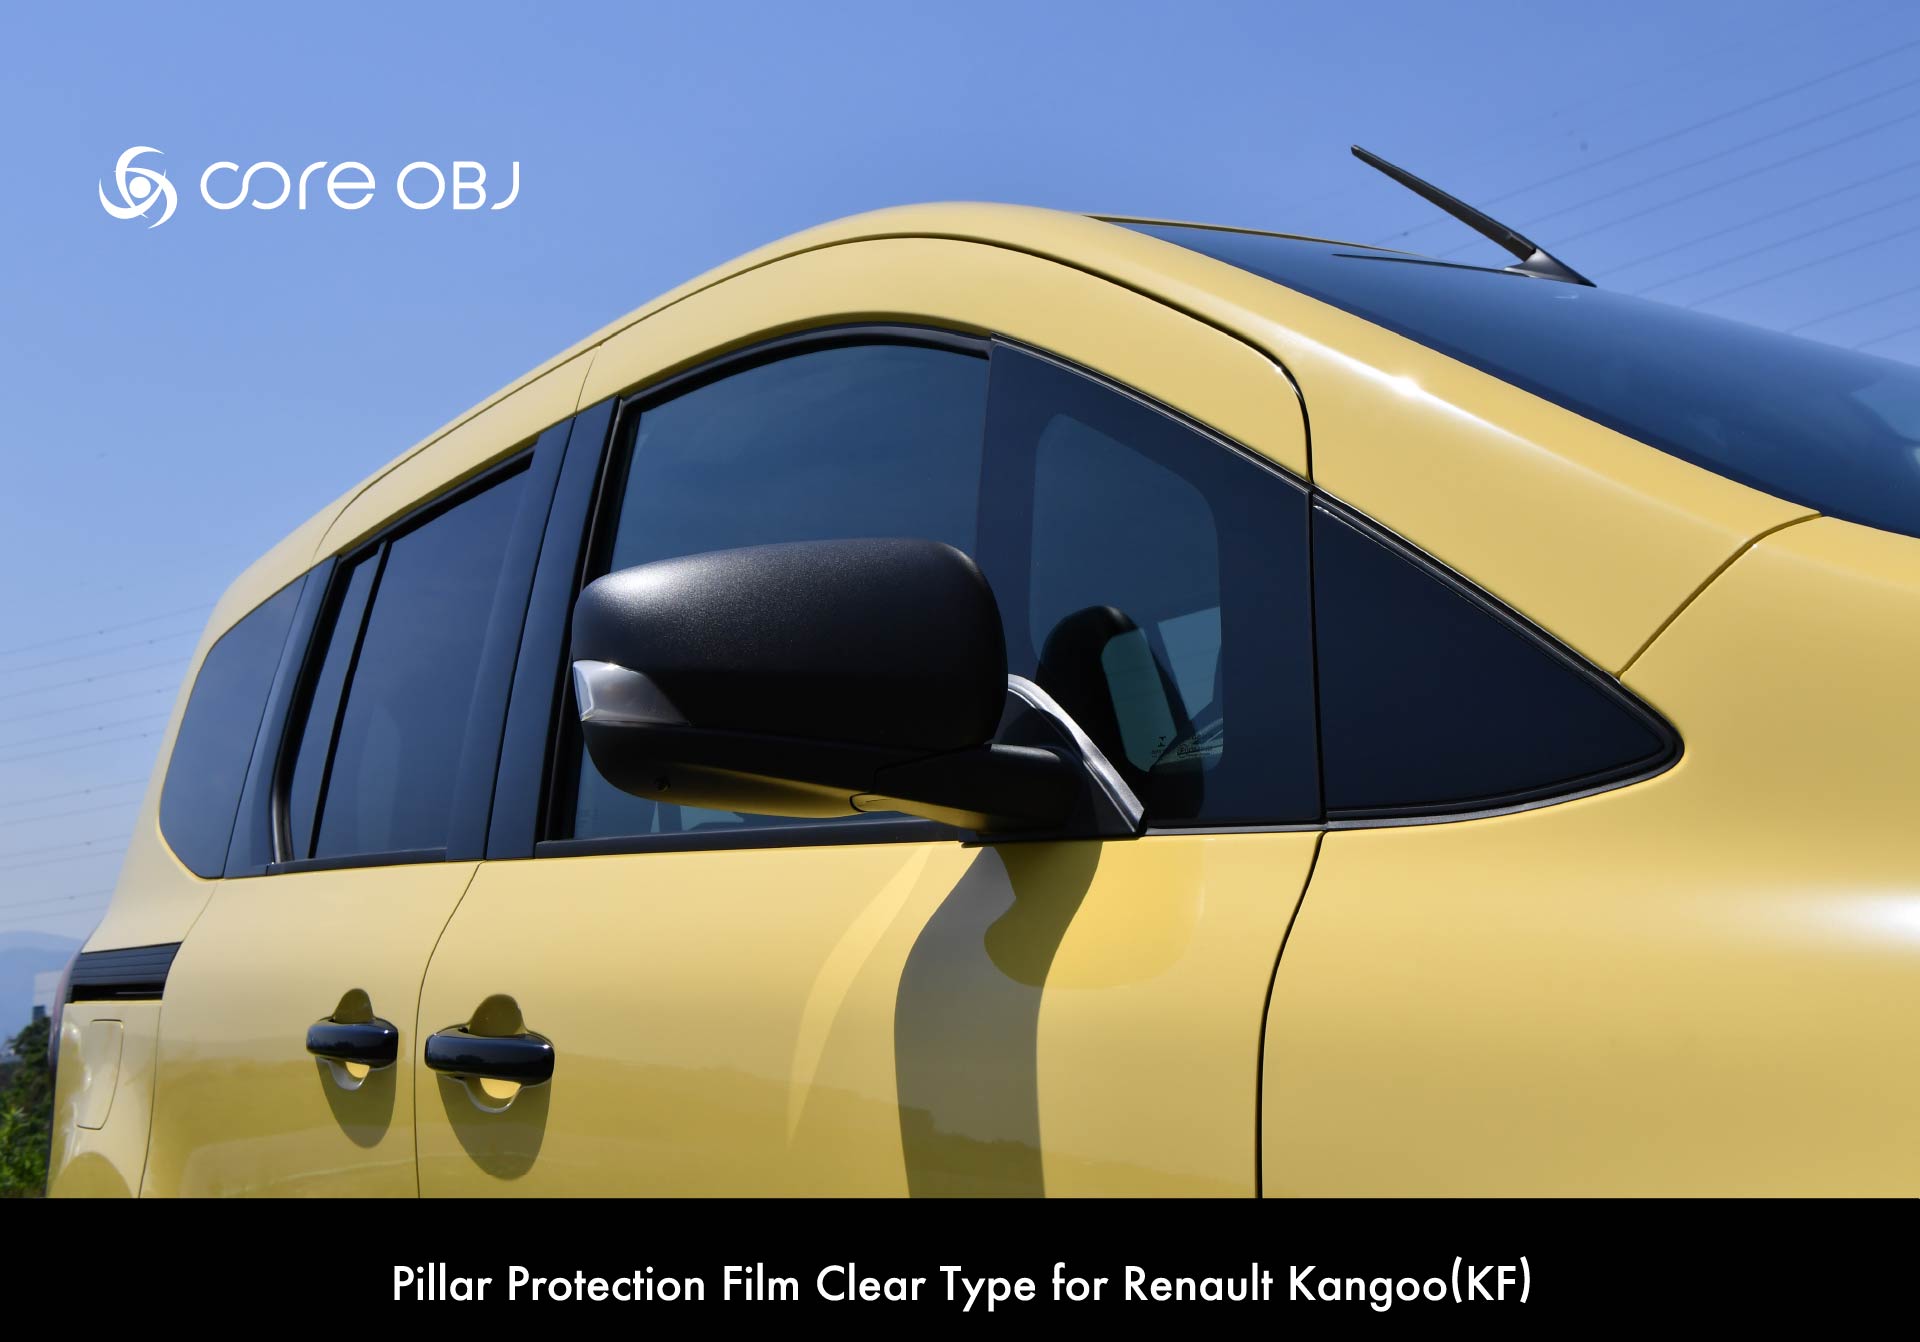 Pillar Protection Film Clear Type for Renault Kangoo(KF) / core obj